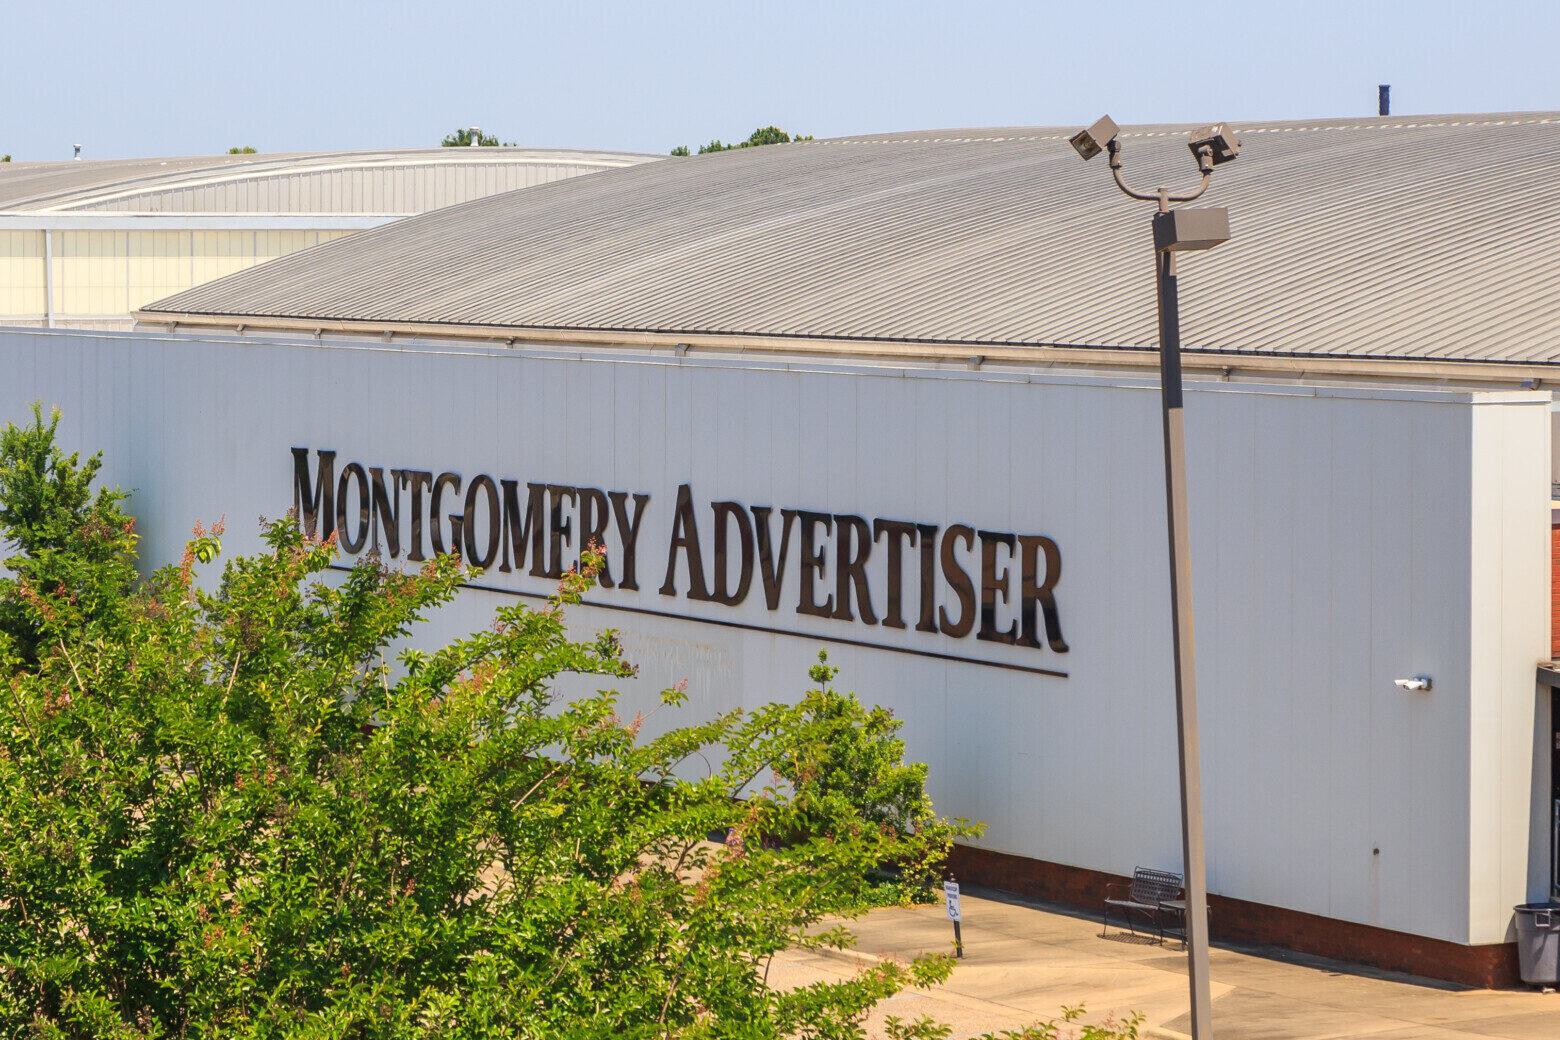 Montgomery Advertiser